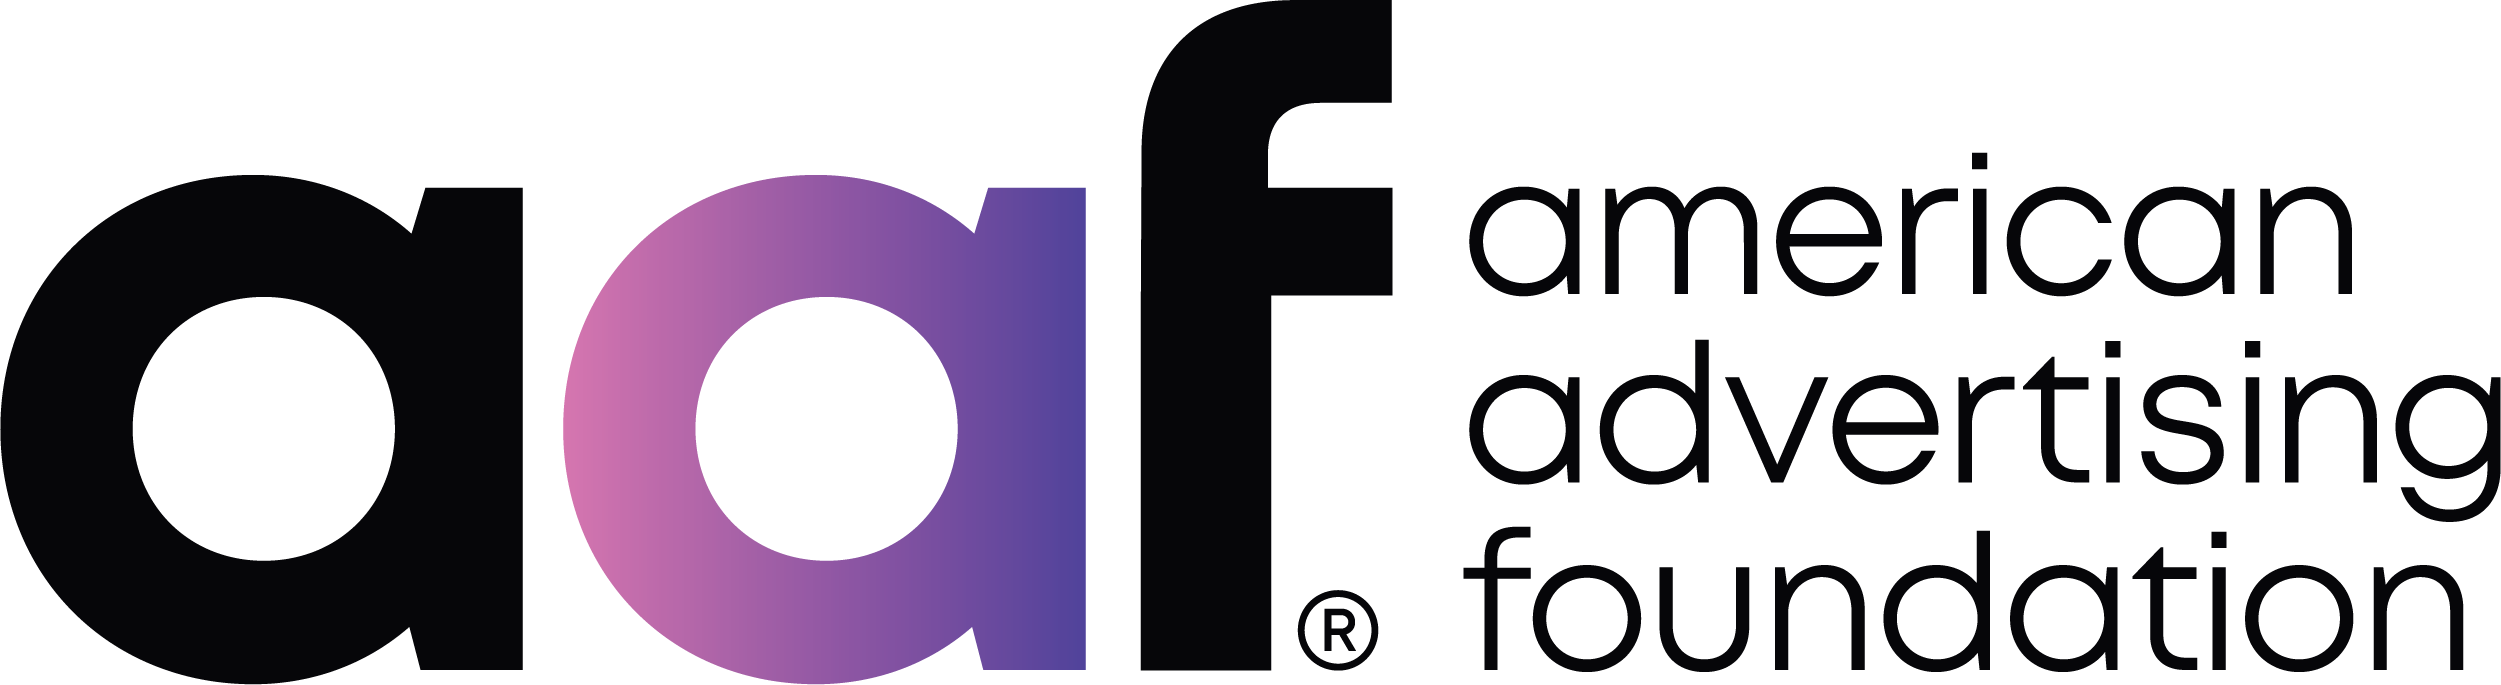 American Advertising Foundation logo